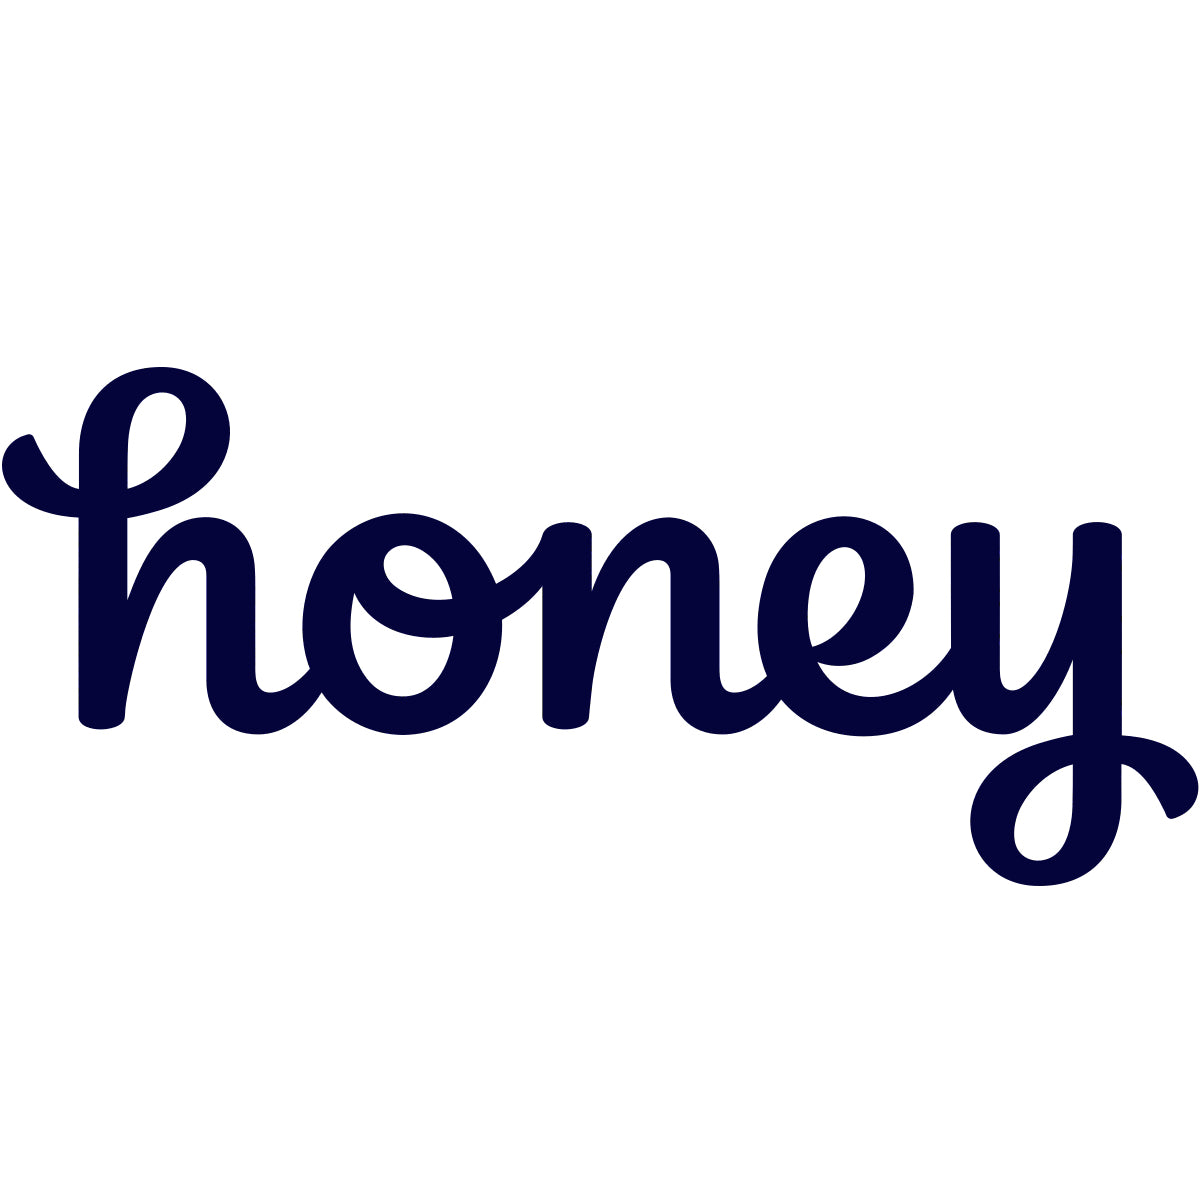 Honey is the LA Galaxy's New Sponsor 